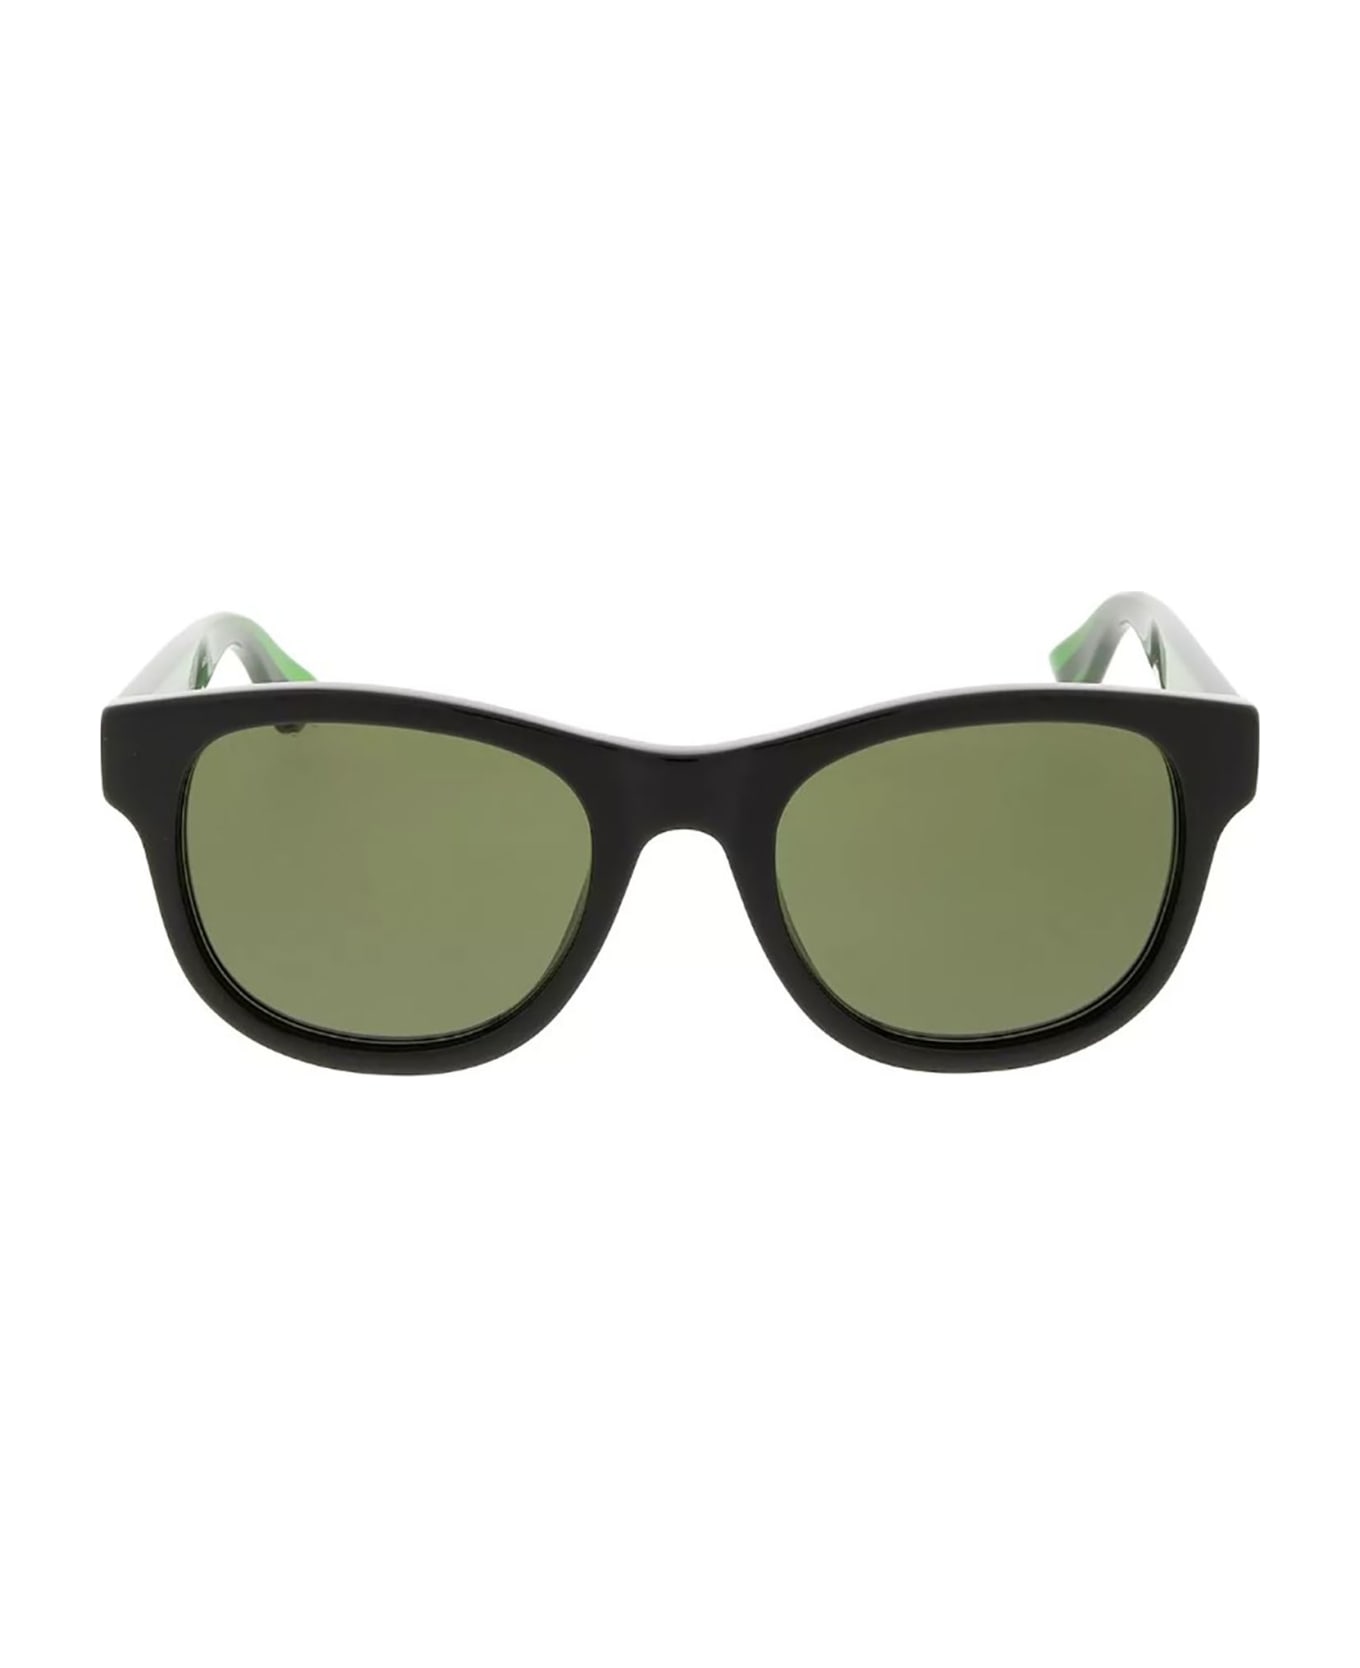 Gucci Eyewear GG0003SN Sunglasses - Black Green Green